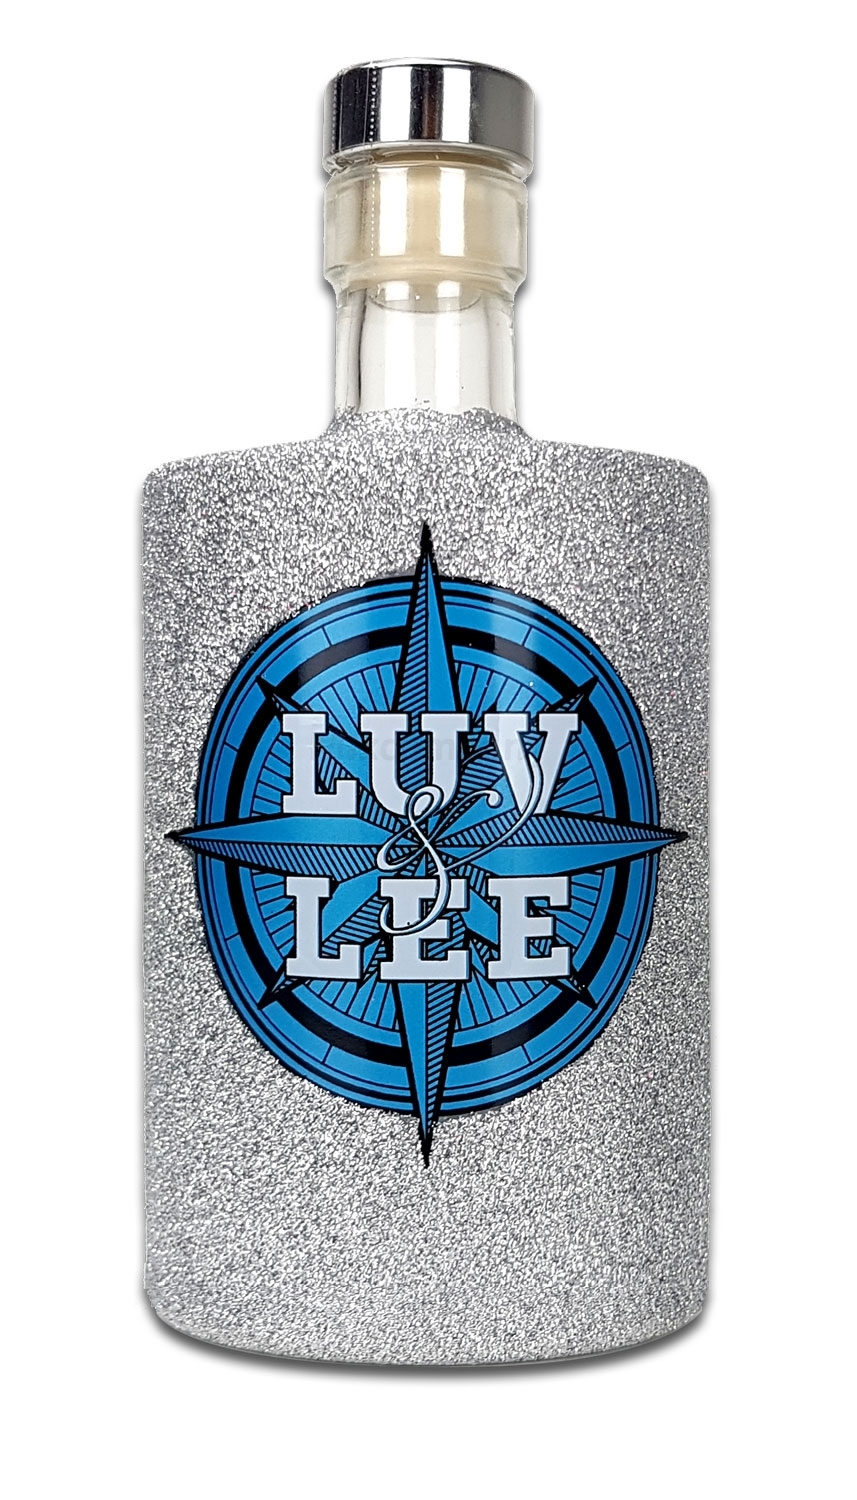 Luv & Lee Hanseatic Dry Gin aus Hamburg 0,5l (43% Vol) - Bling Bling Glitzerflasche in silber